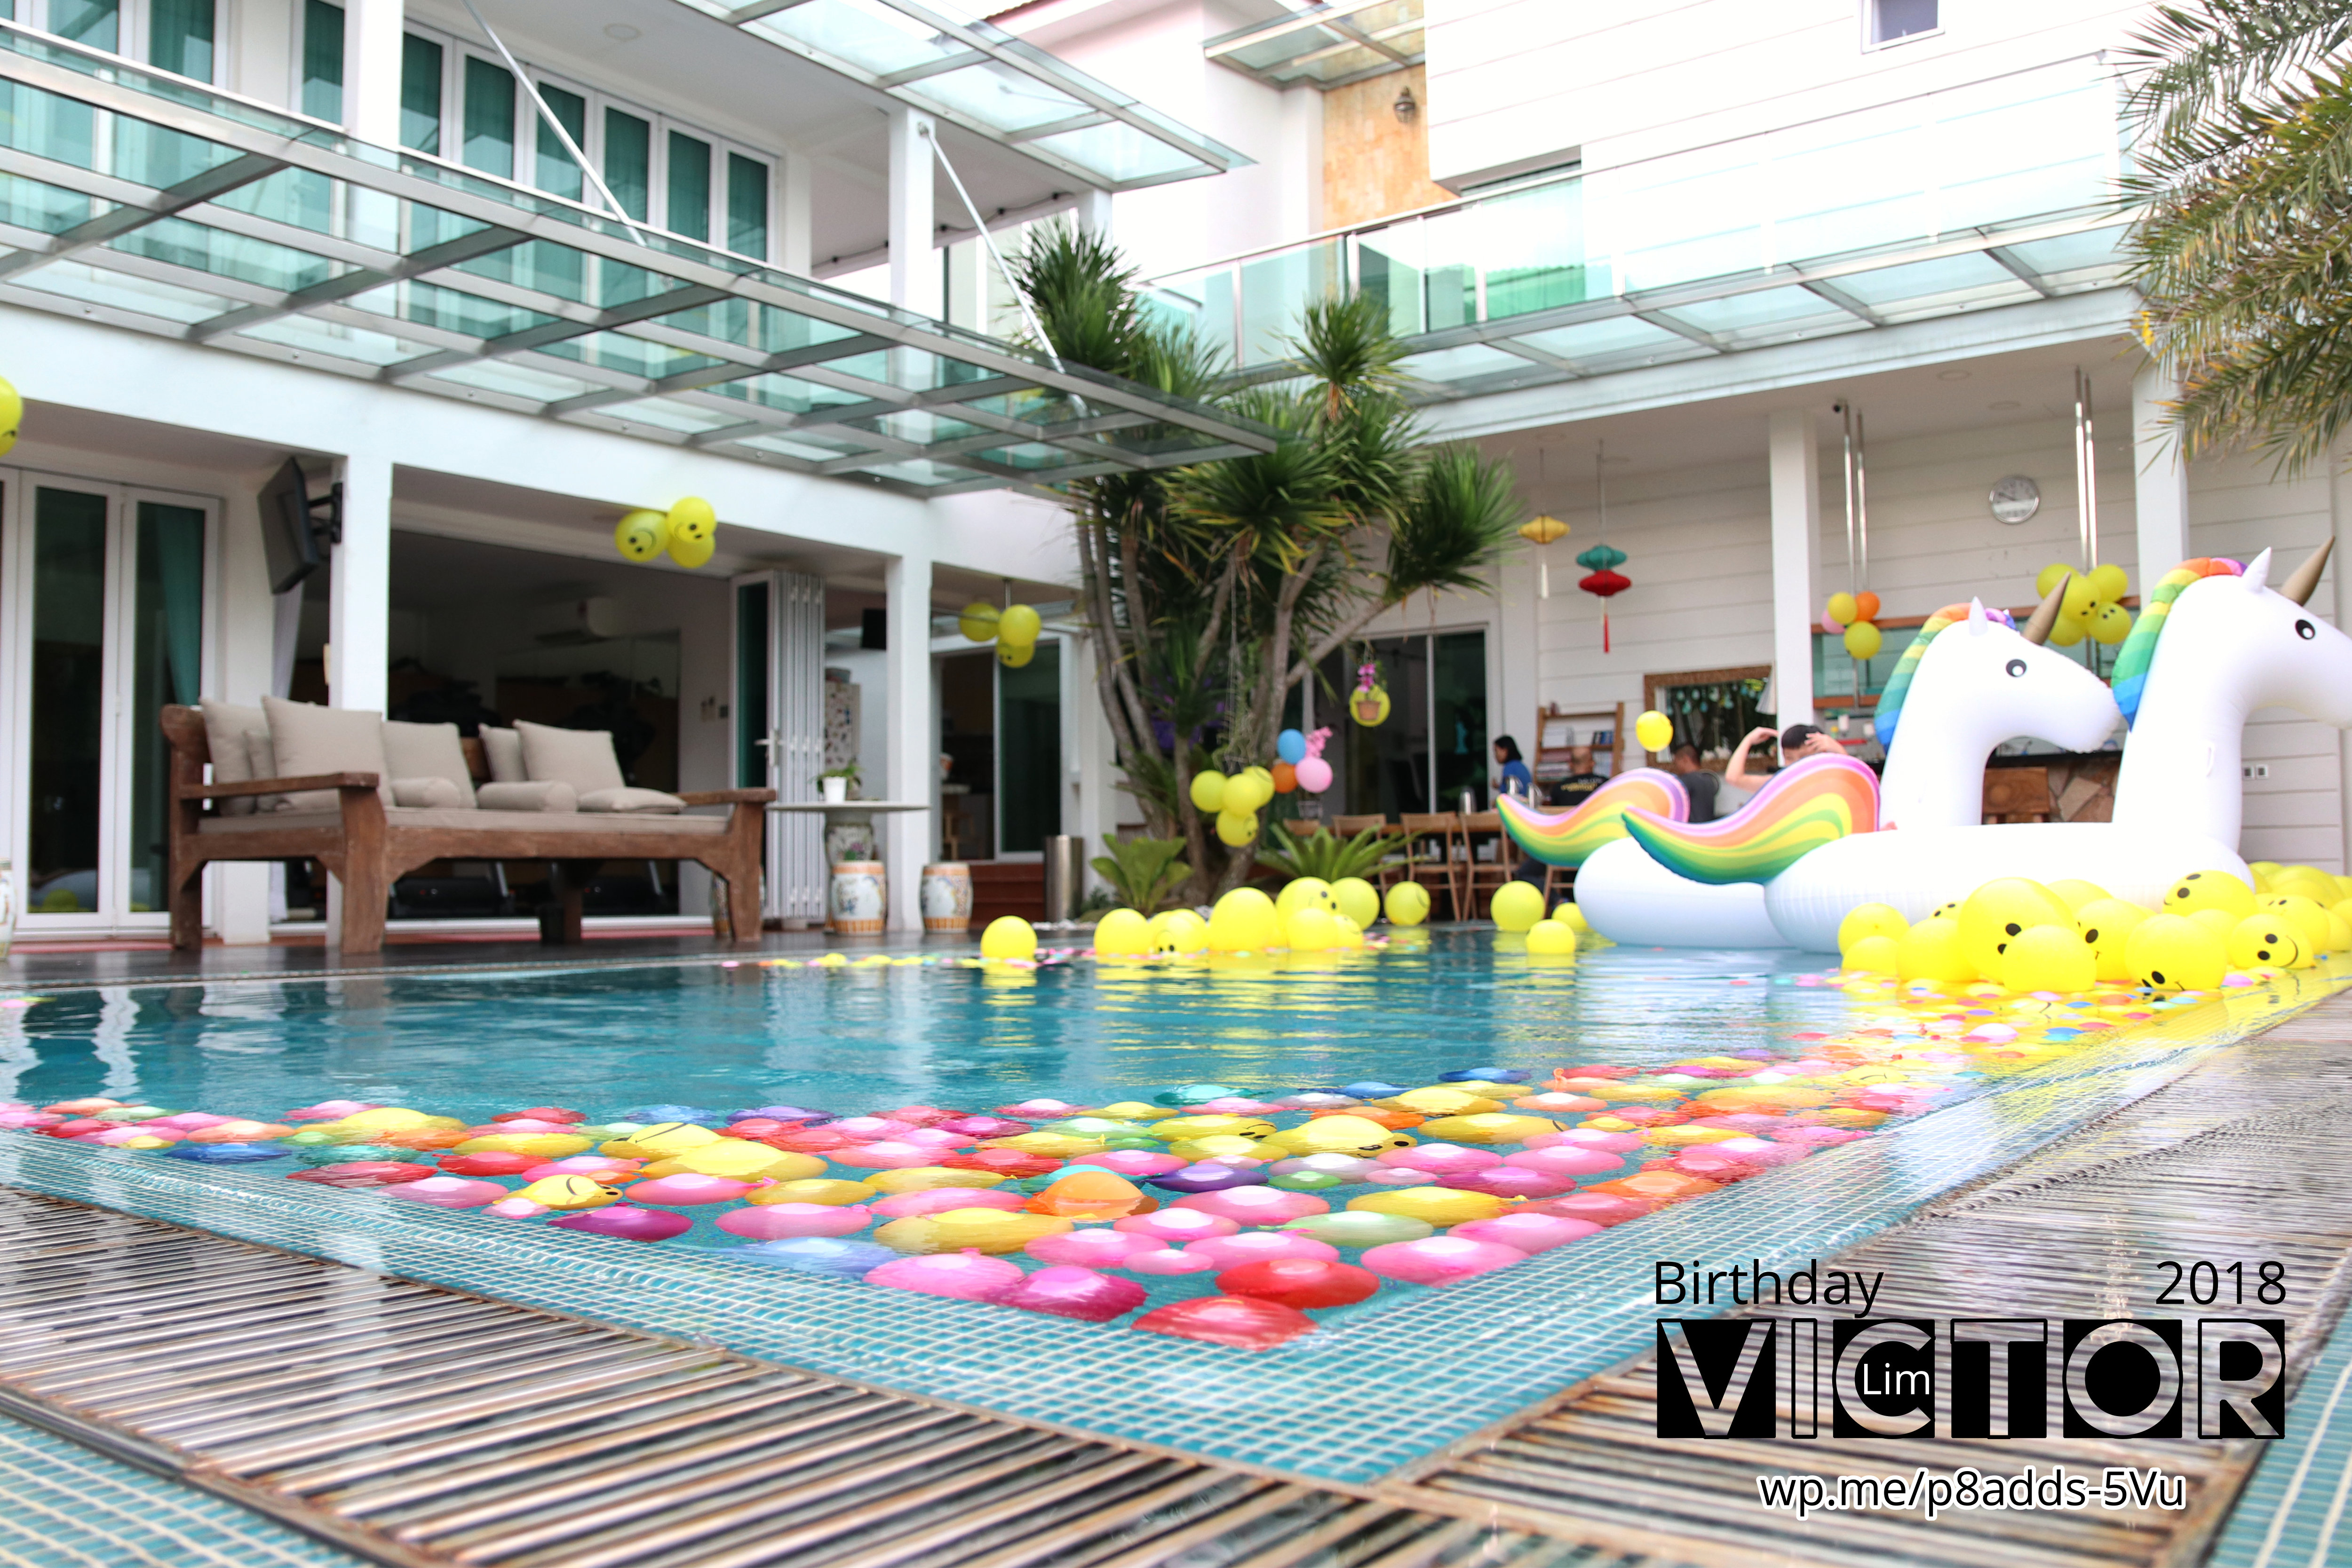 Victor Lim Birthday 2018 in Malaysia Party Buffet Swimming Fun A08